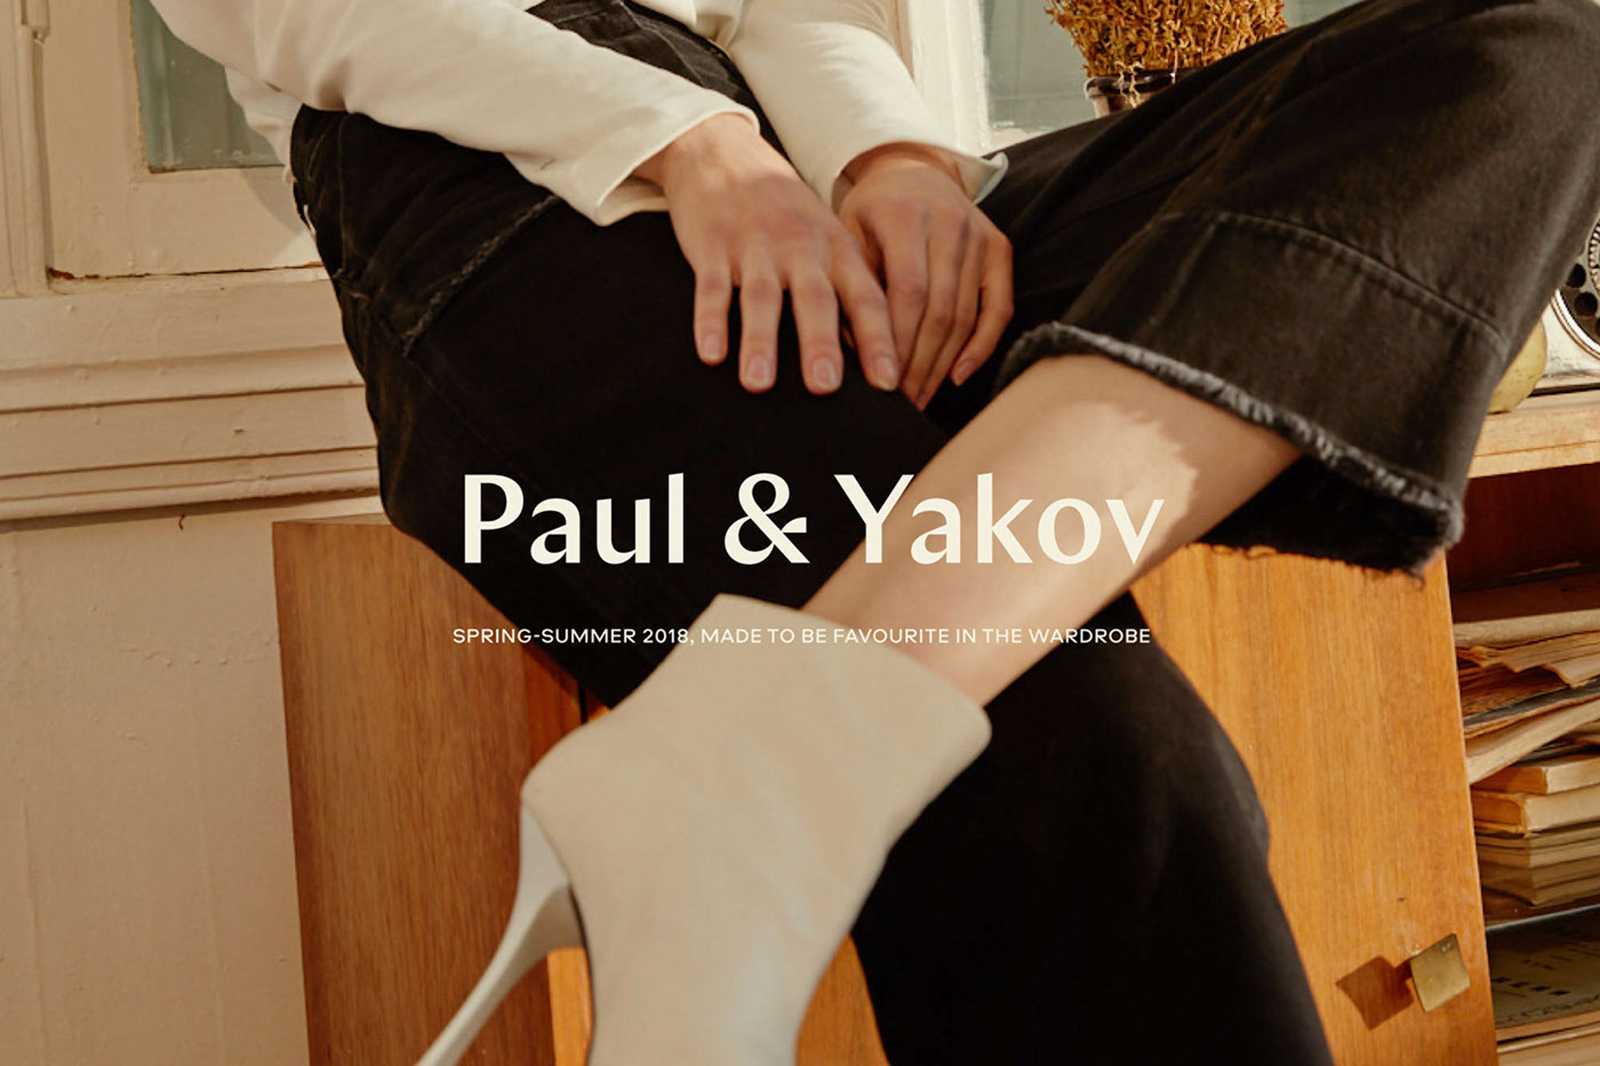 Paul & Yakov 时装品牌视觉VI形象设计欣赏-深圳VI设计1